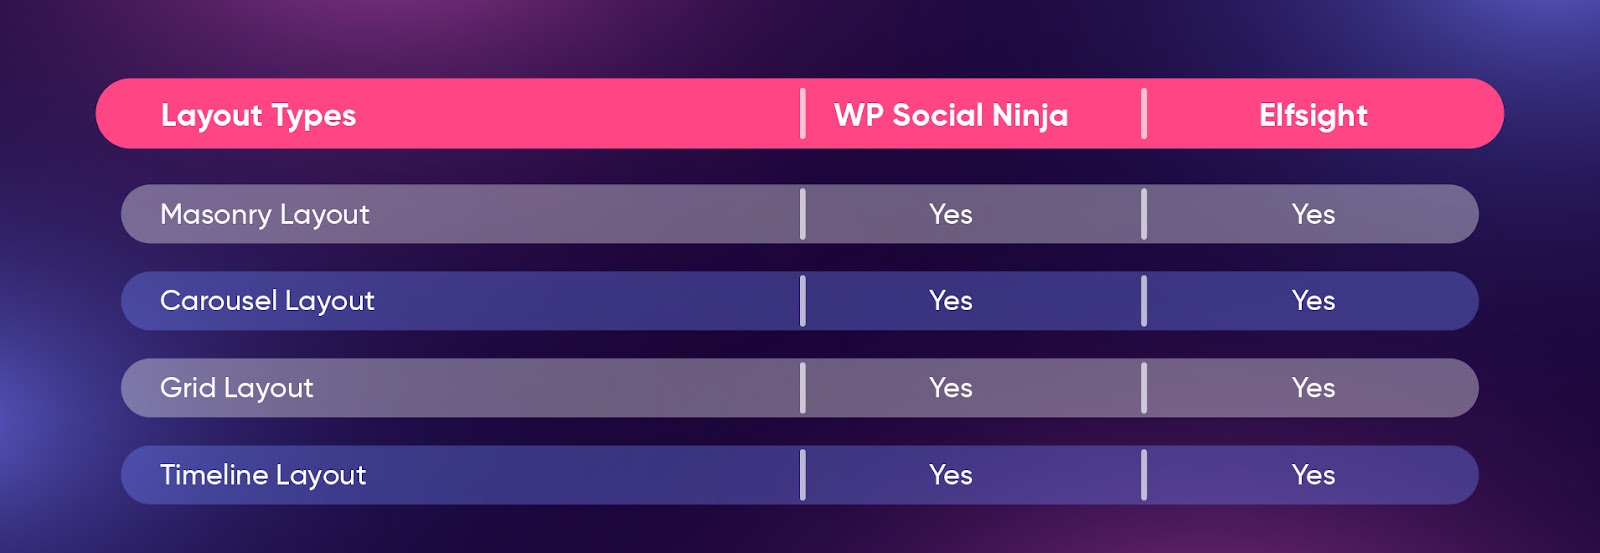 WP Social Ninja Vs Elfsight layout types